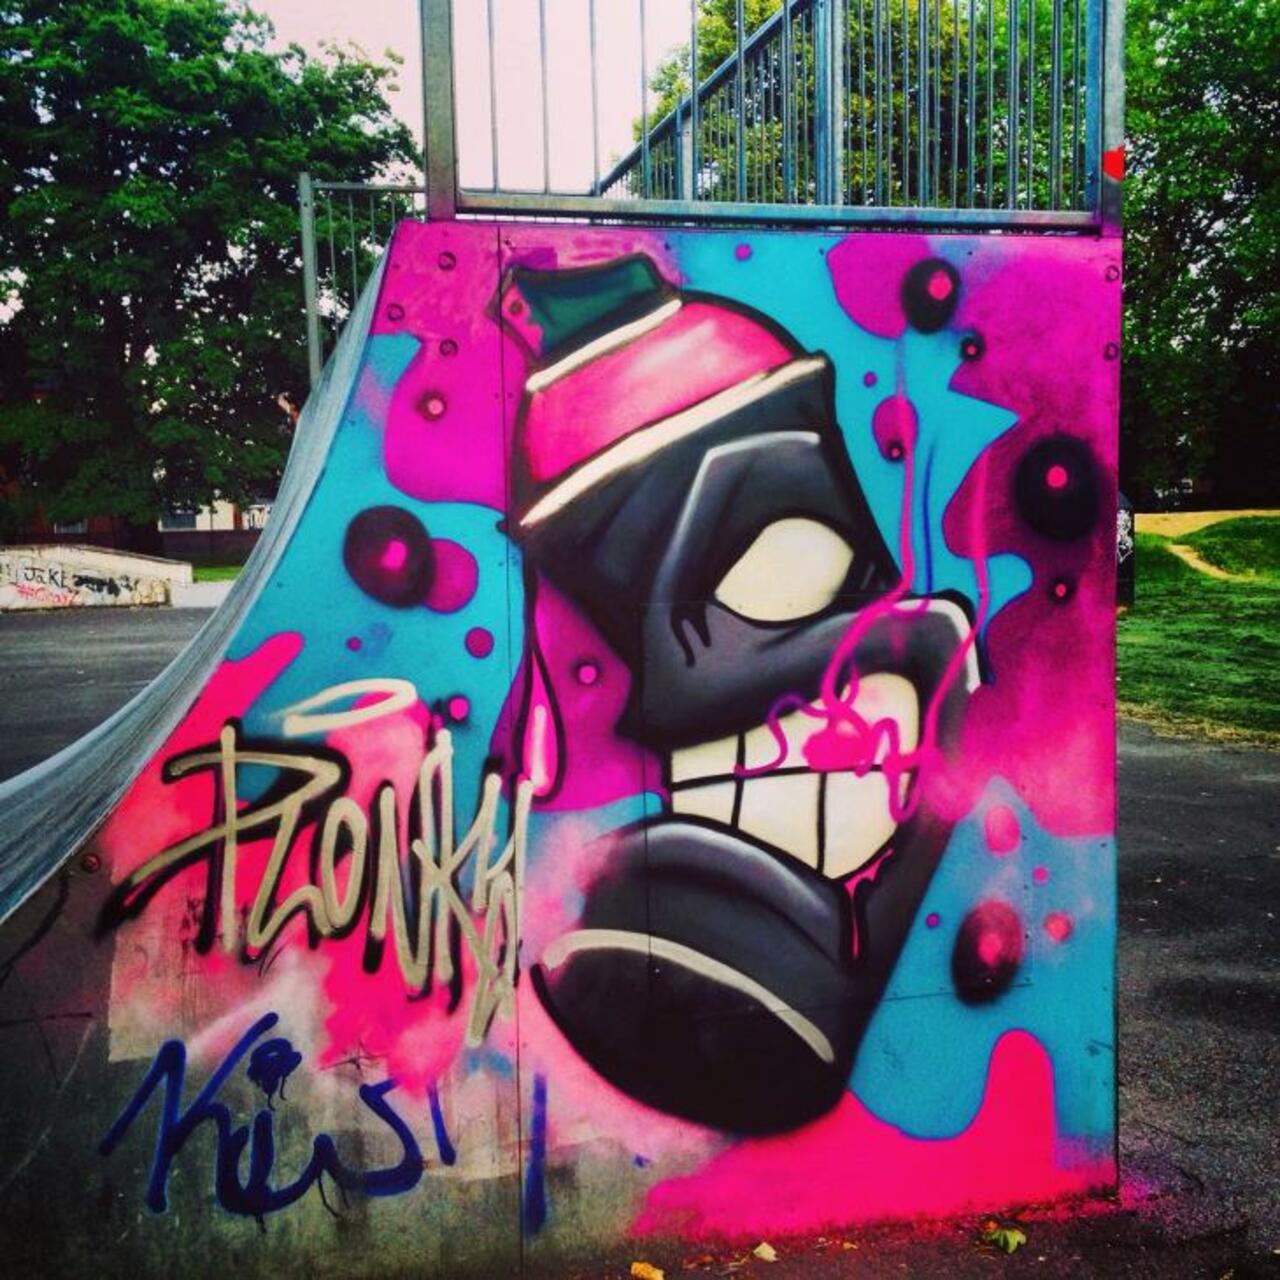 Found a few months back at #Gloucester skatepark #skatelife #graffiti #streetart artist unknown @rtglos http://t.co/nxClO9oYCo